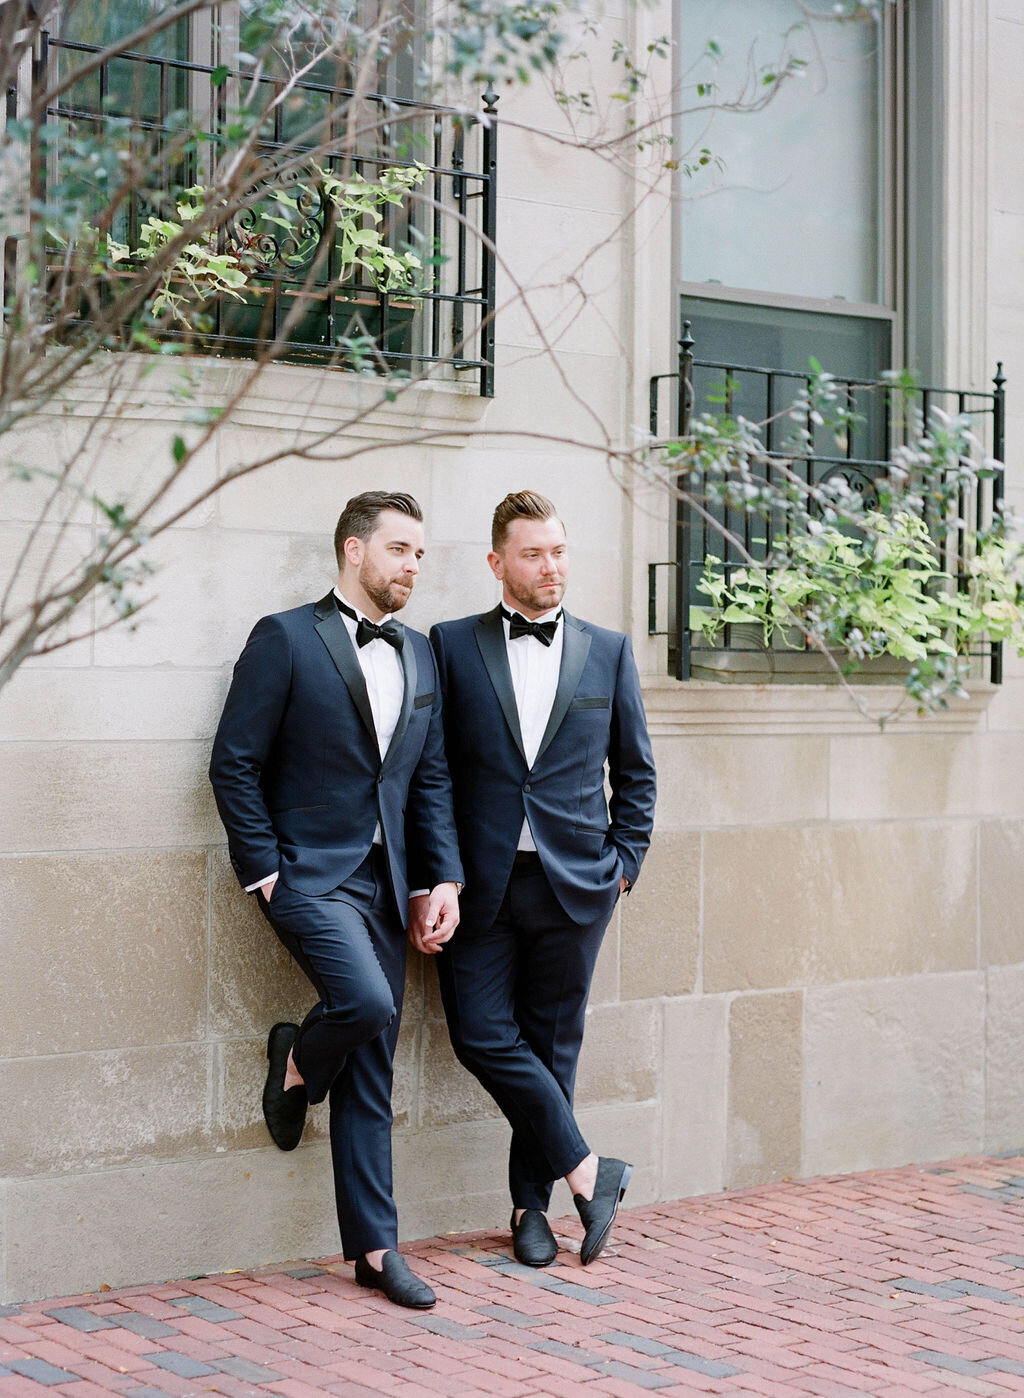 Kate-Murtaugh-Events-Boston-city-wedding-planner-elopement-micro-wedding-intimate-celebration-grooms